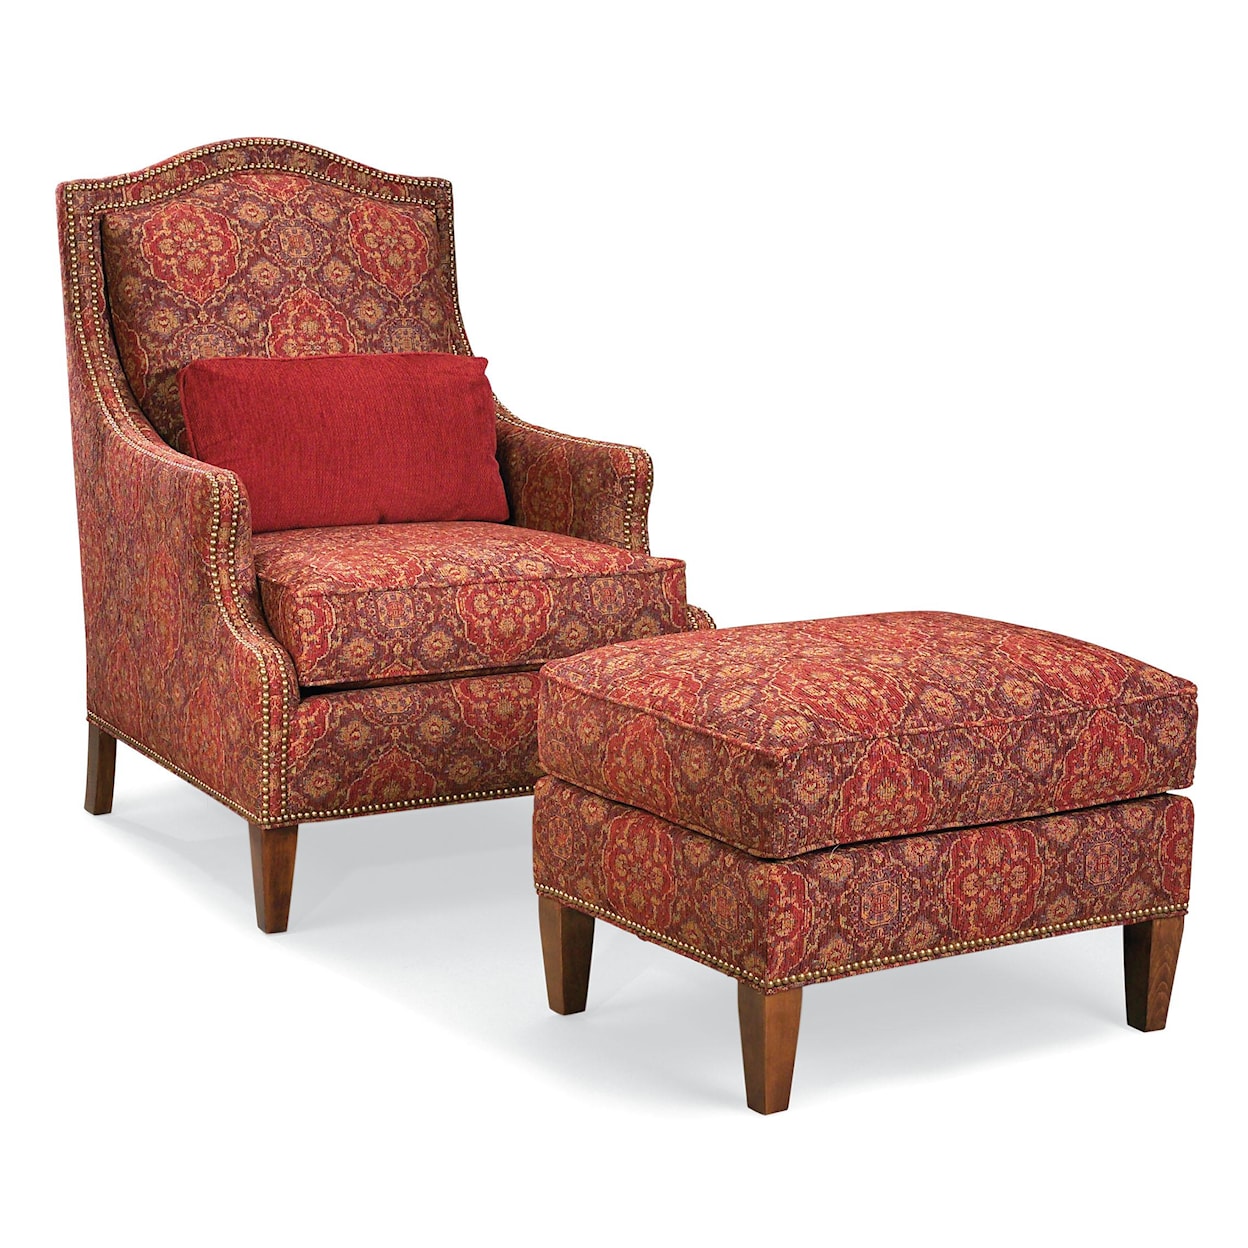 Fairfield Chairs Chair and Ottoman